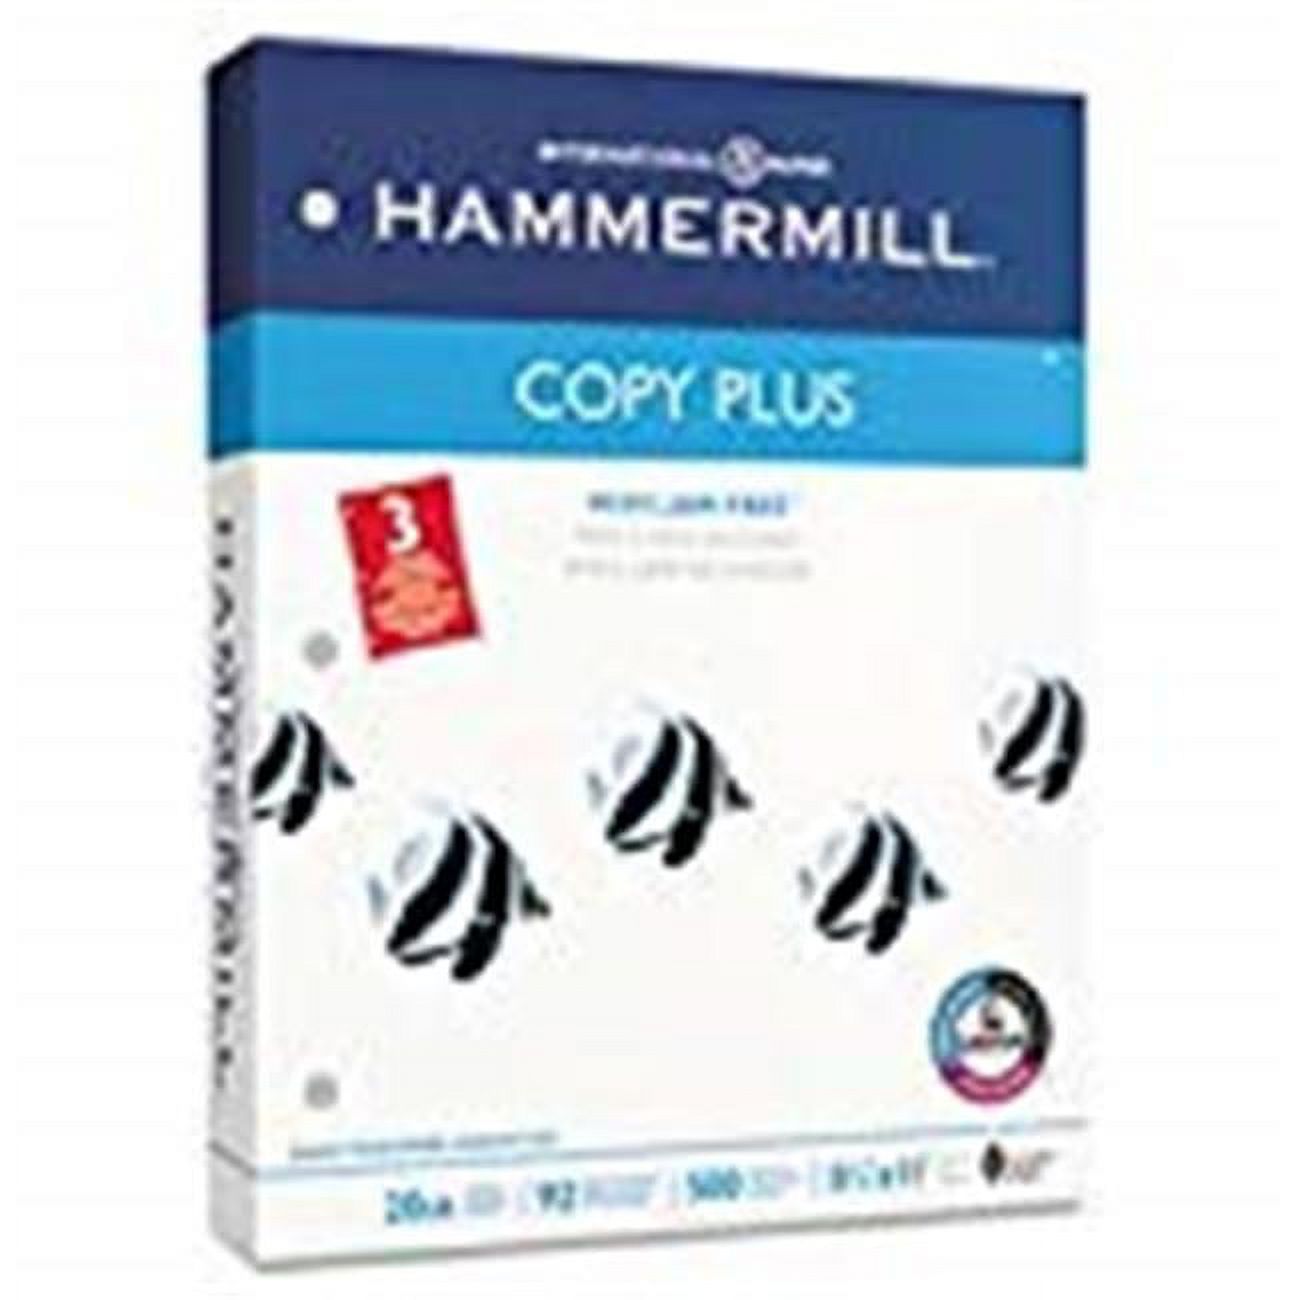 Hammermill 8.5 x 11 in. Copy Plus Copy Paper 